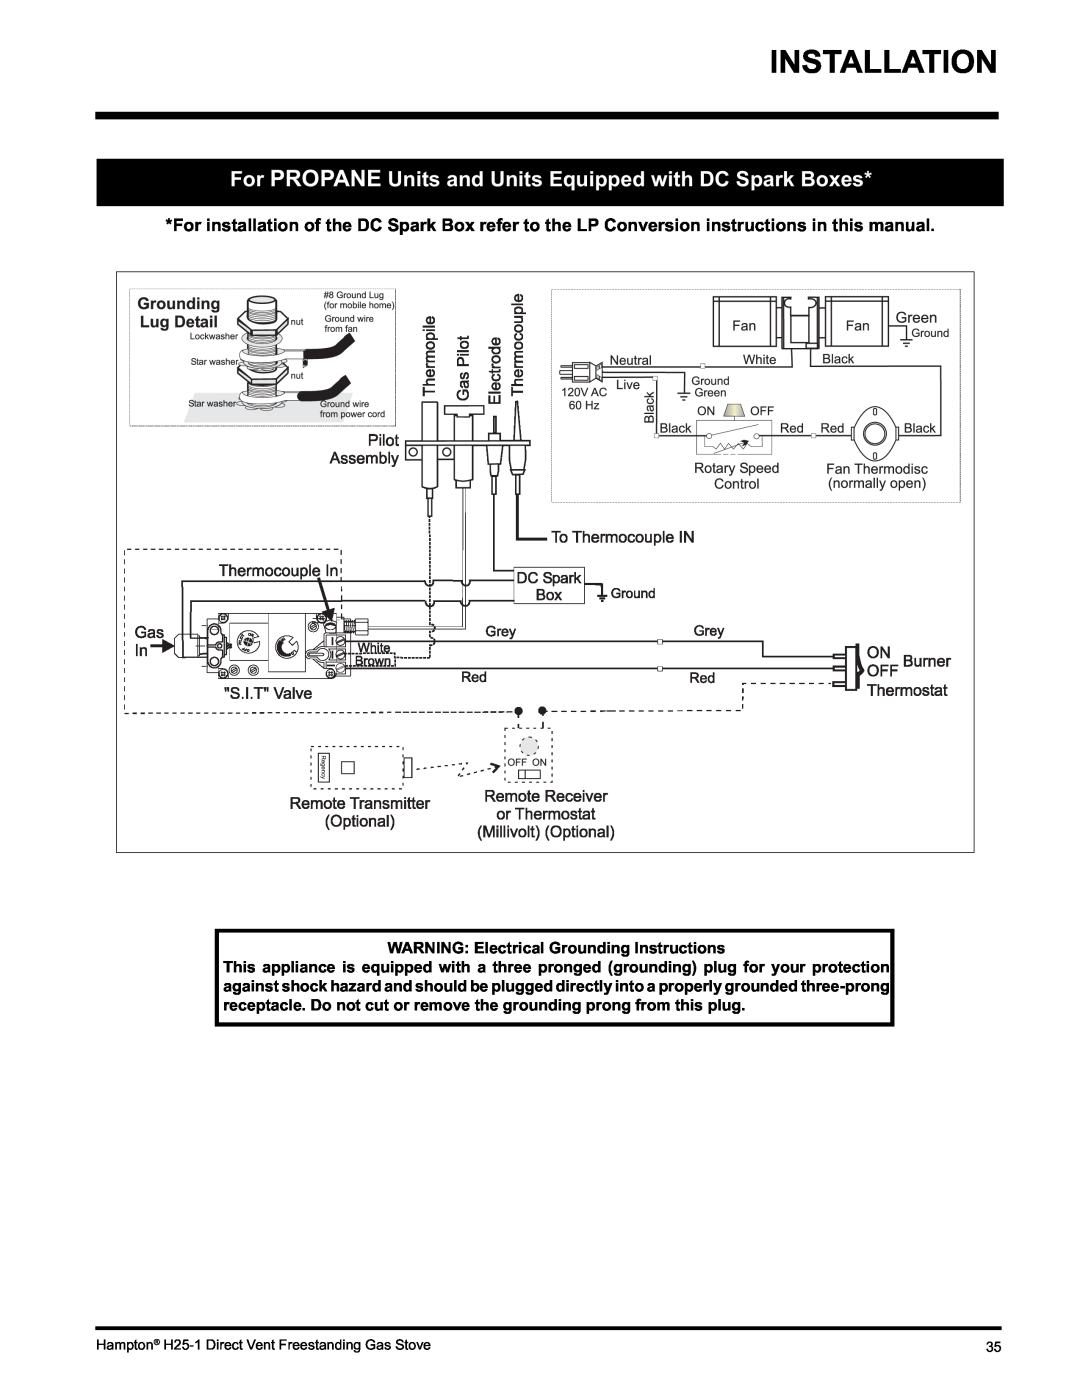 Hampton Direct H25-LP1, H25-NG1 installation manual Installation, WARNING Electrical Grounding Instructions 